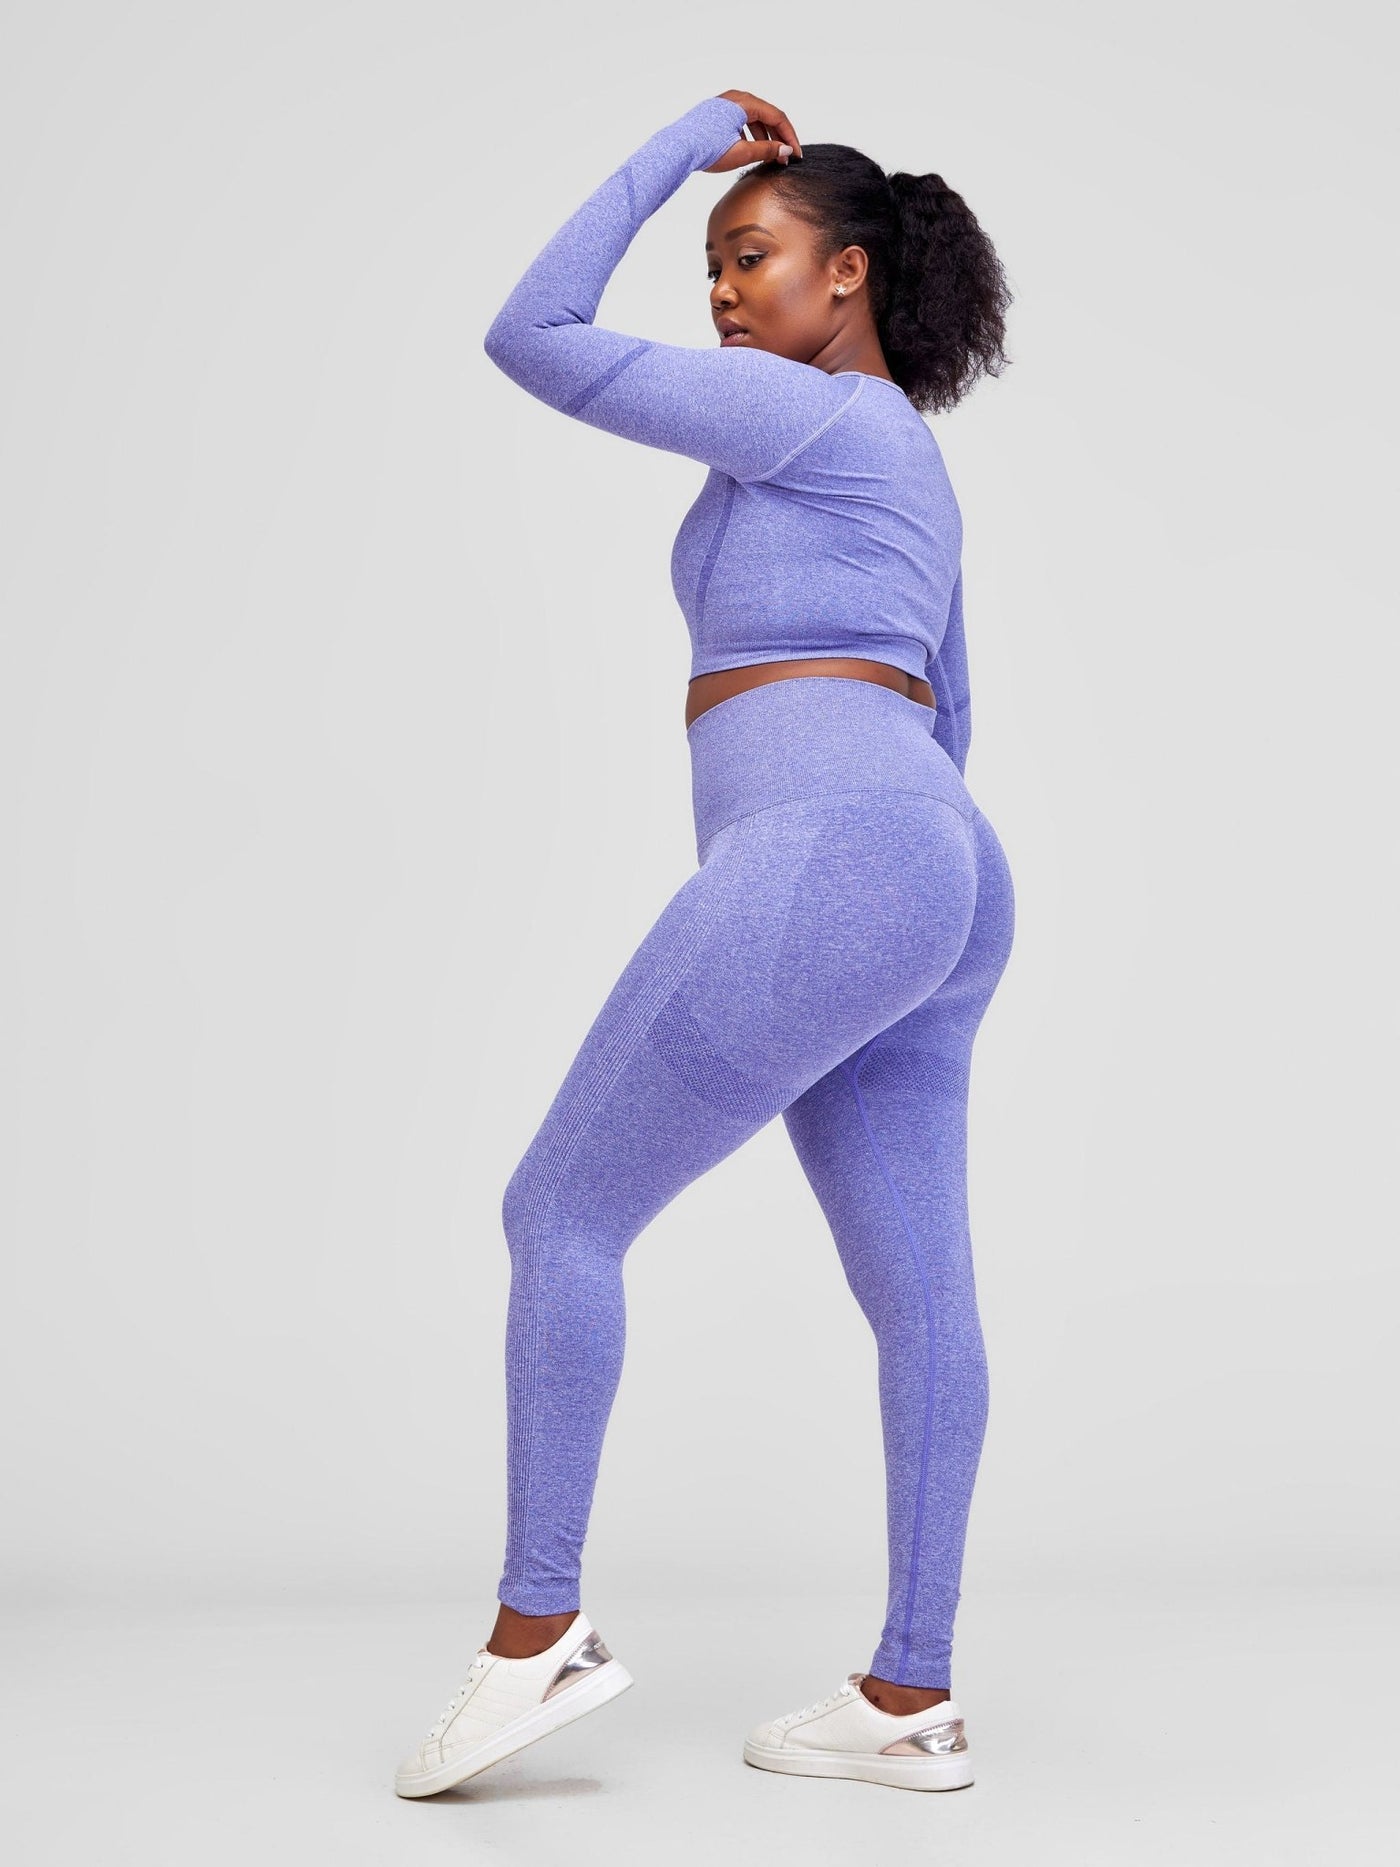 Ava Fitness Merlin 3 Piece yoga Set - Purple - Shopzetu